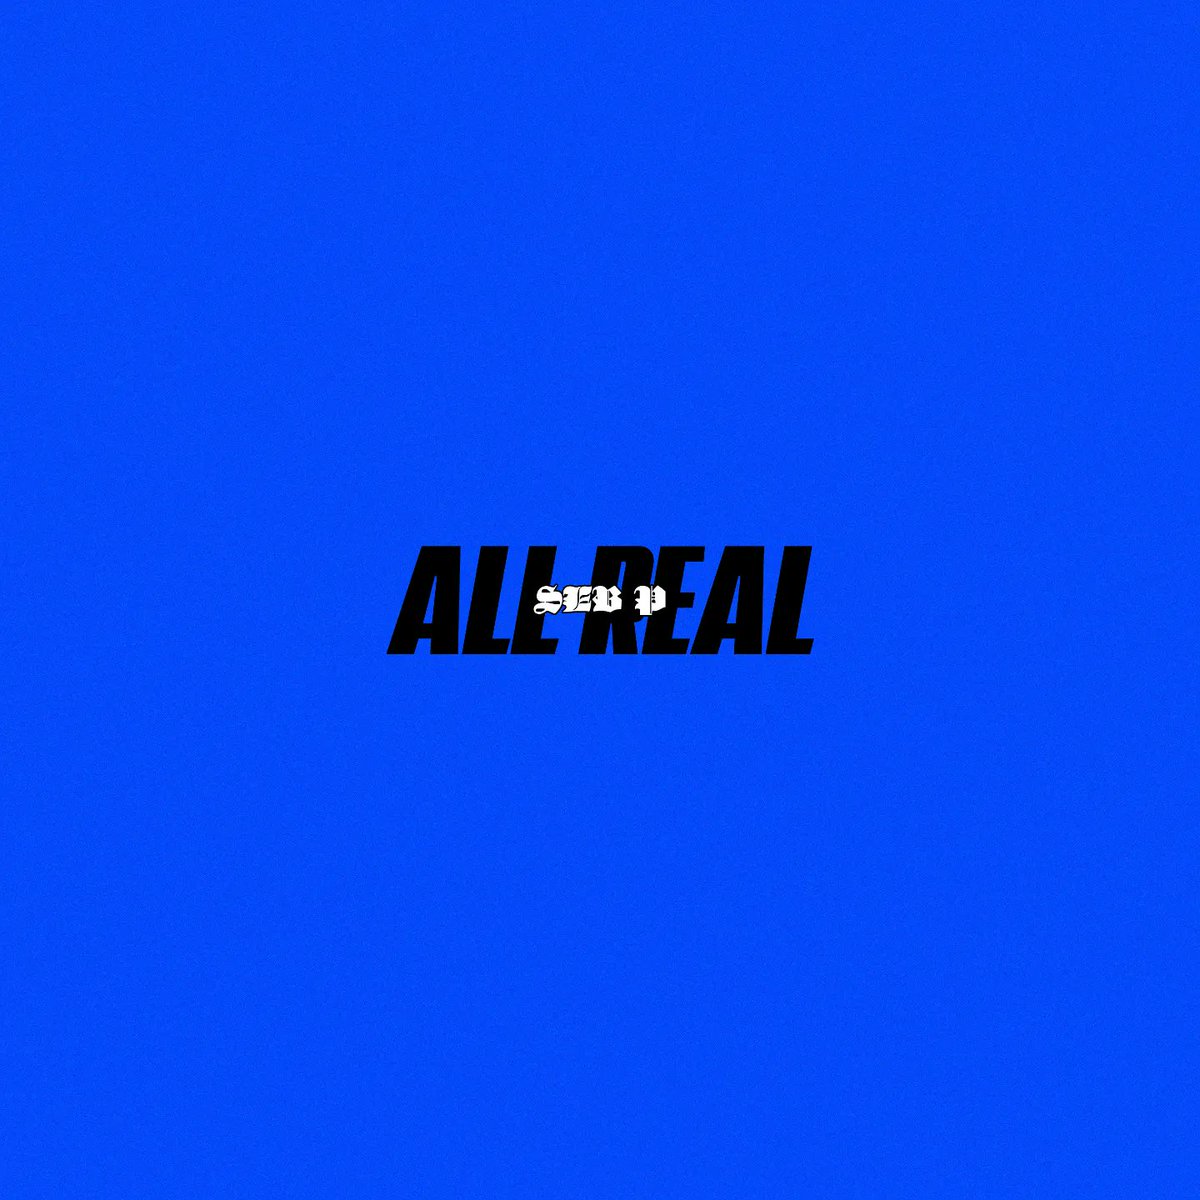 🐍💯🦅 'All Real' 💎 Out Now‼️⚠️

New Slapper Every Friday on Every Platform vro🖤💯🗯 #trapameriqueb #sebpofficial #singlerelease #newsingle #allreal #rl

youtu.be/KekhLcCCUj0